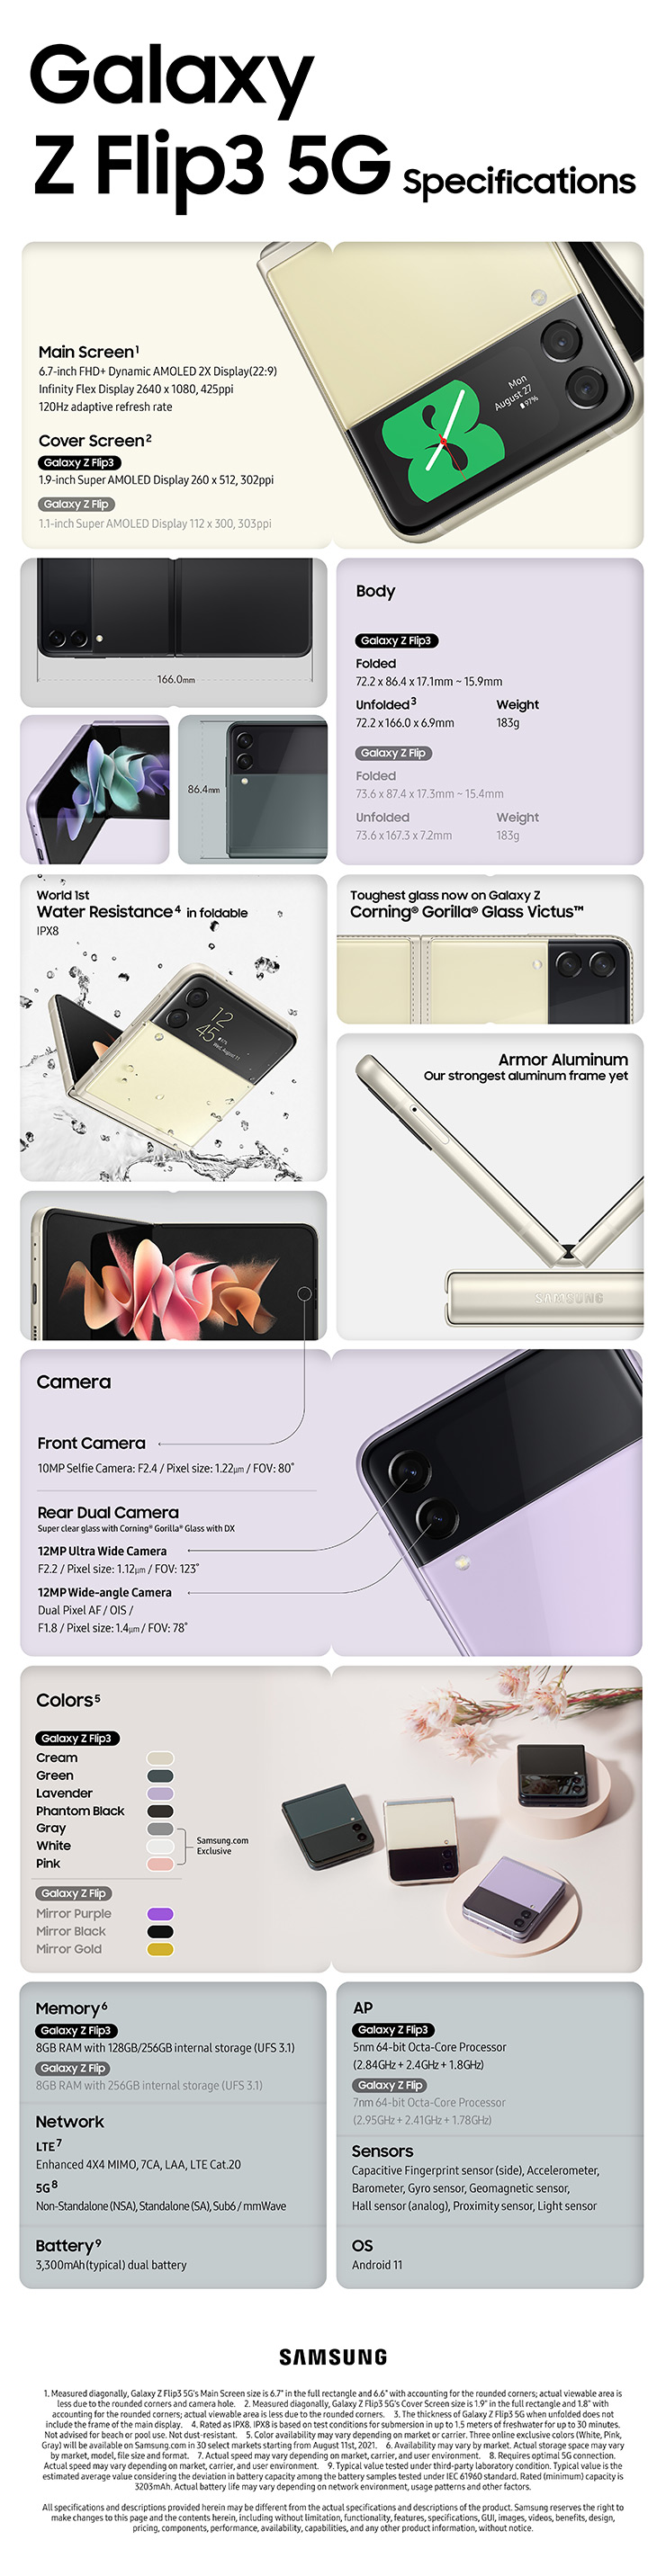 Samsung Galaxy Z Flip3 infographic